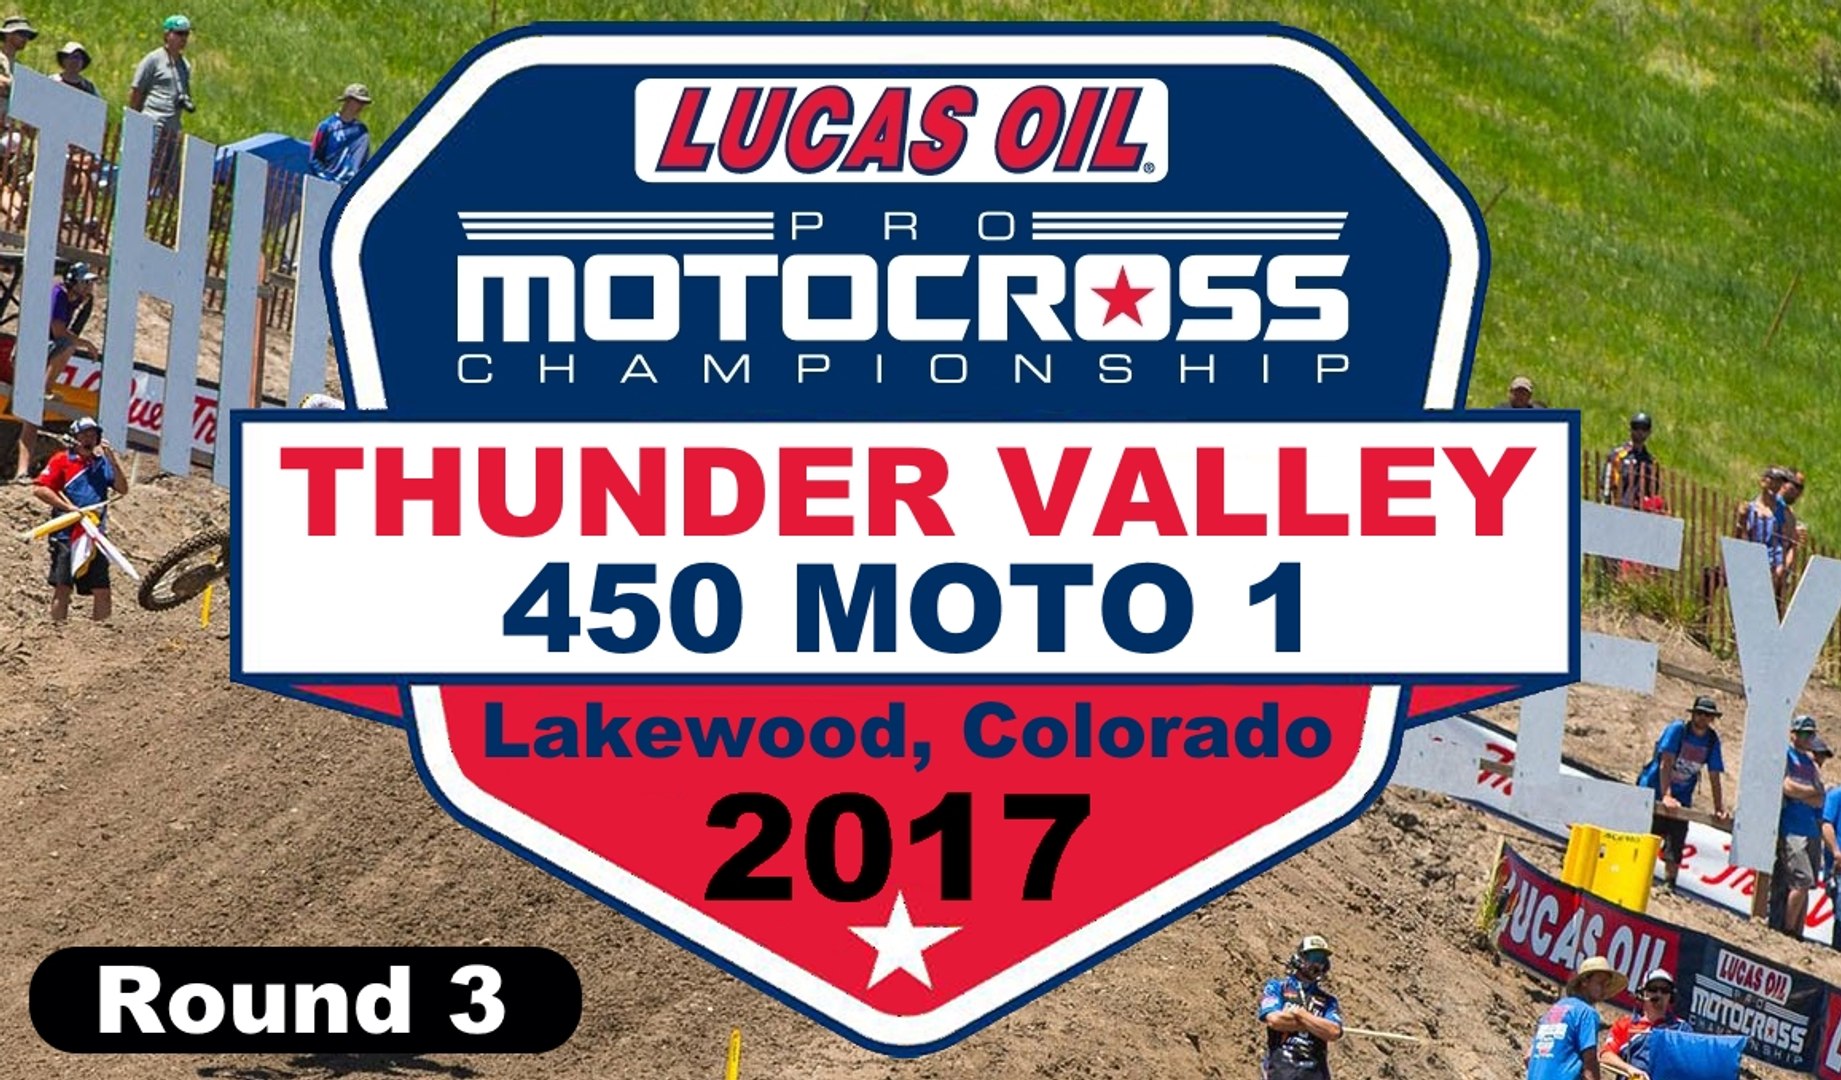 2017 Motocross Round 3 Thunder Valley 450 Moto 1